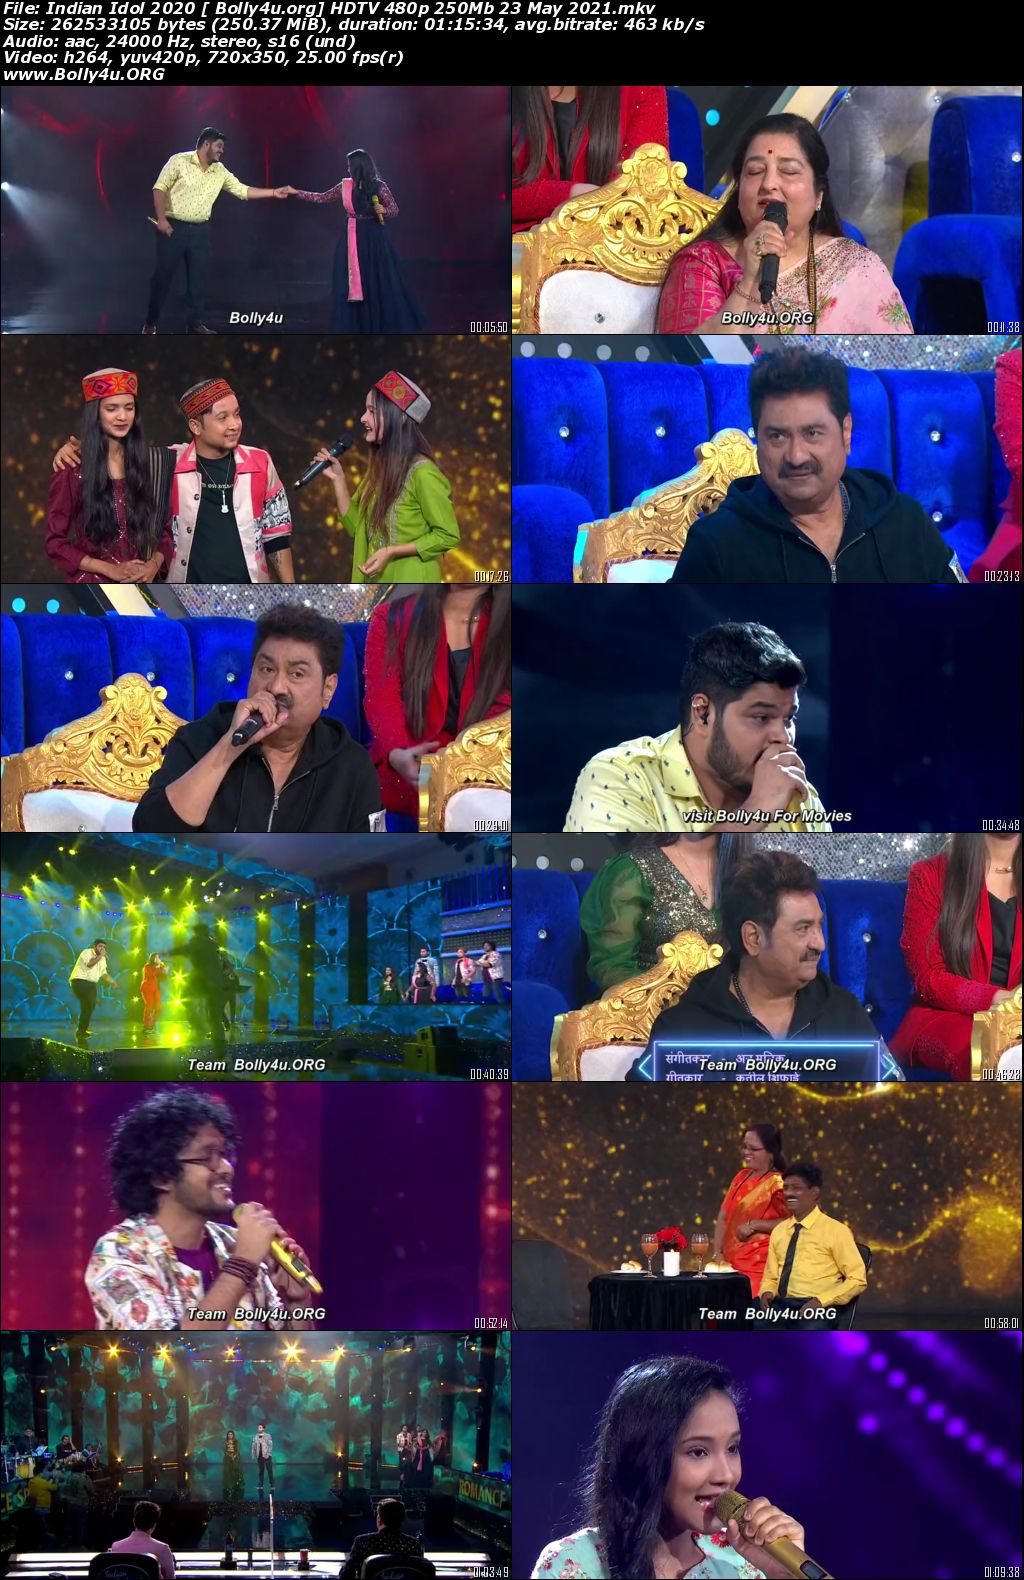 Indian Idol 2020 HDTV 480p 250Mb 23 May 2021 Download